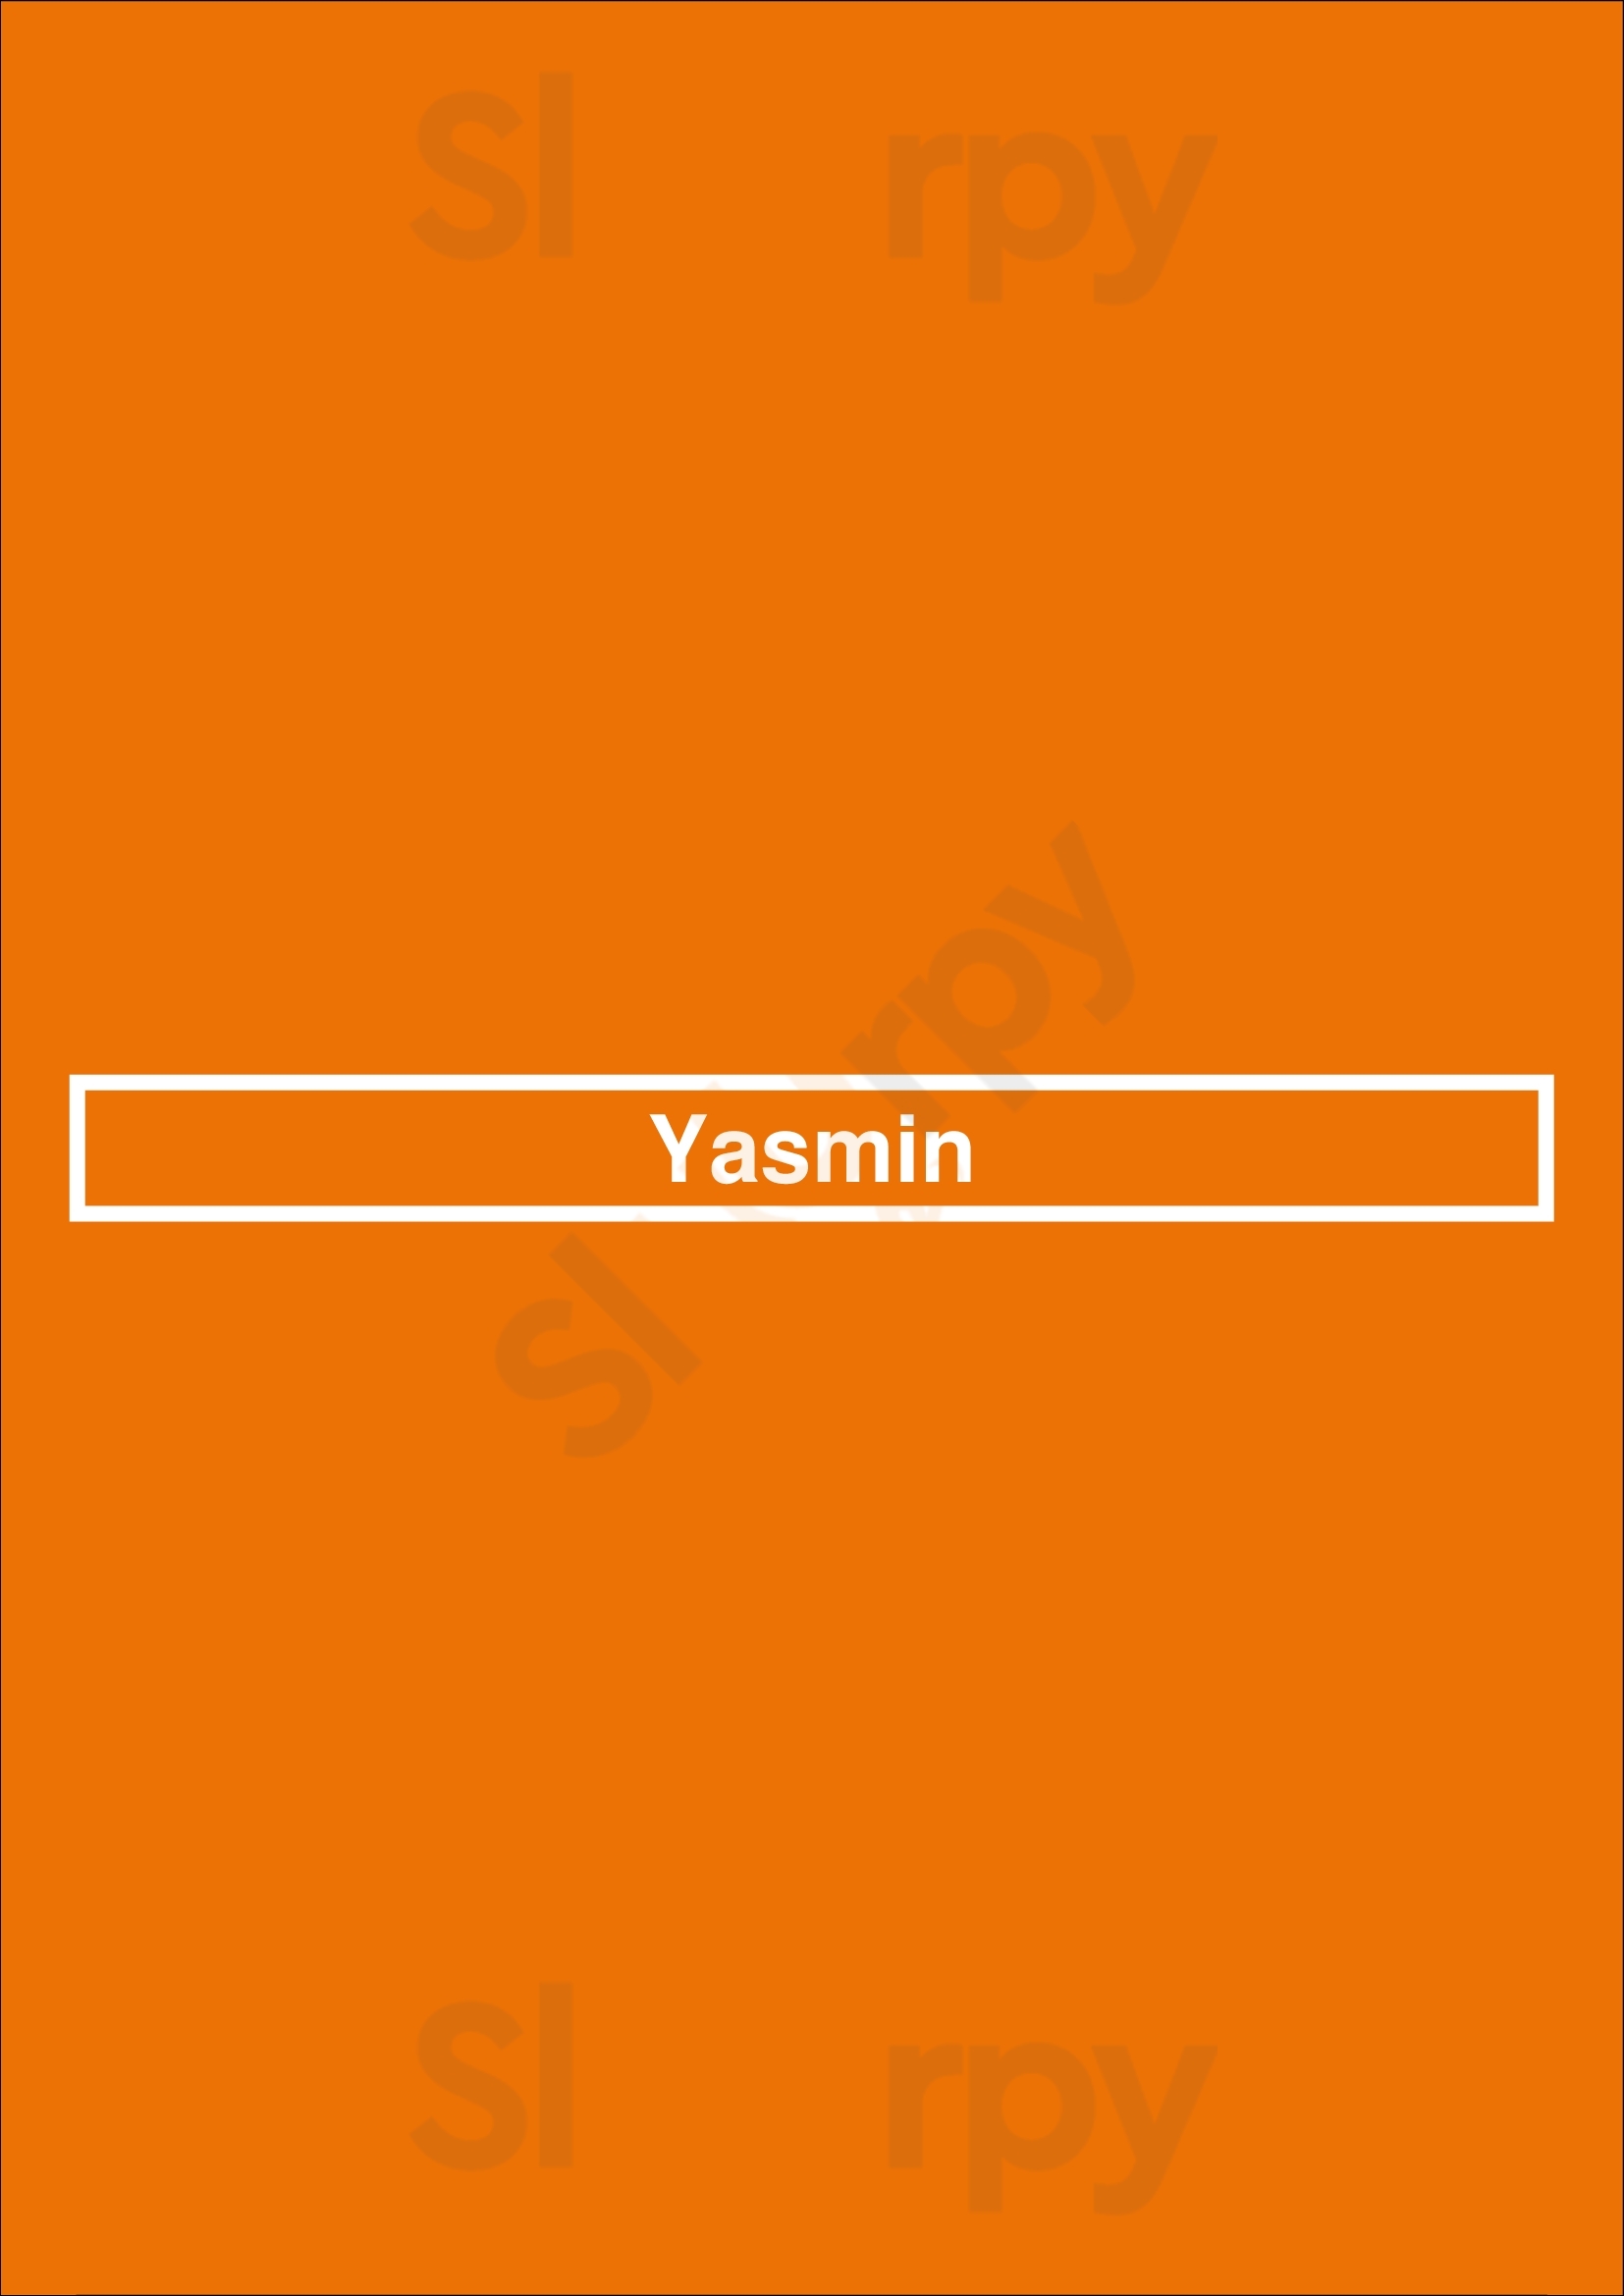 Yasmin Amsterdam Menu - 1